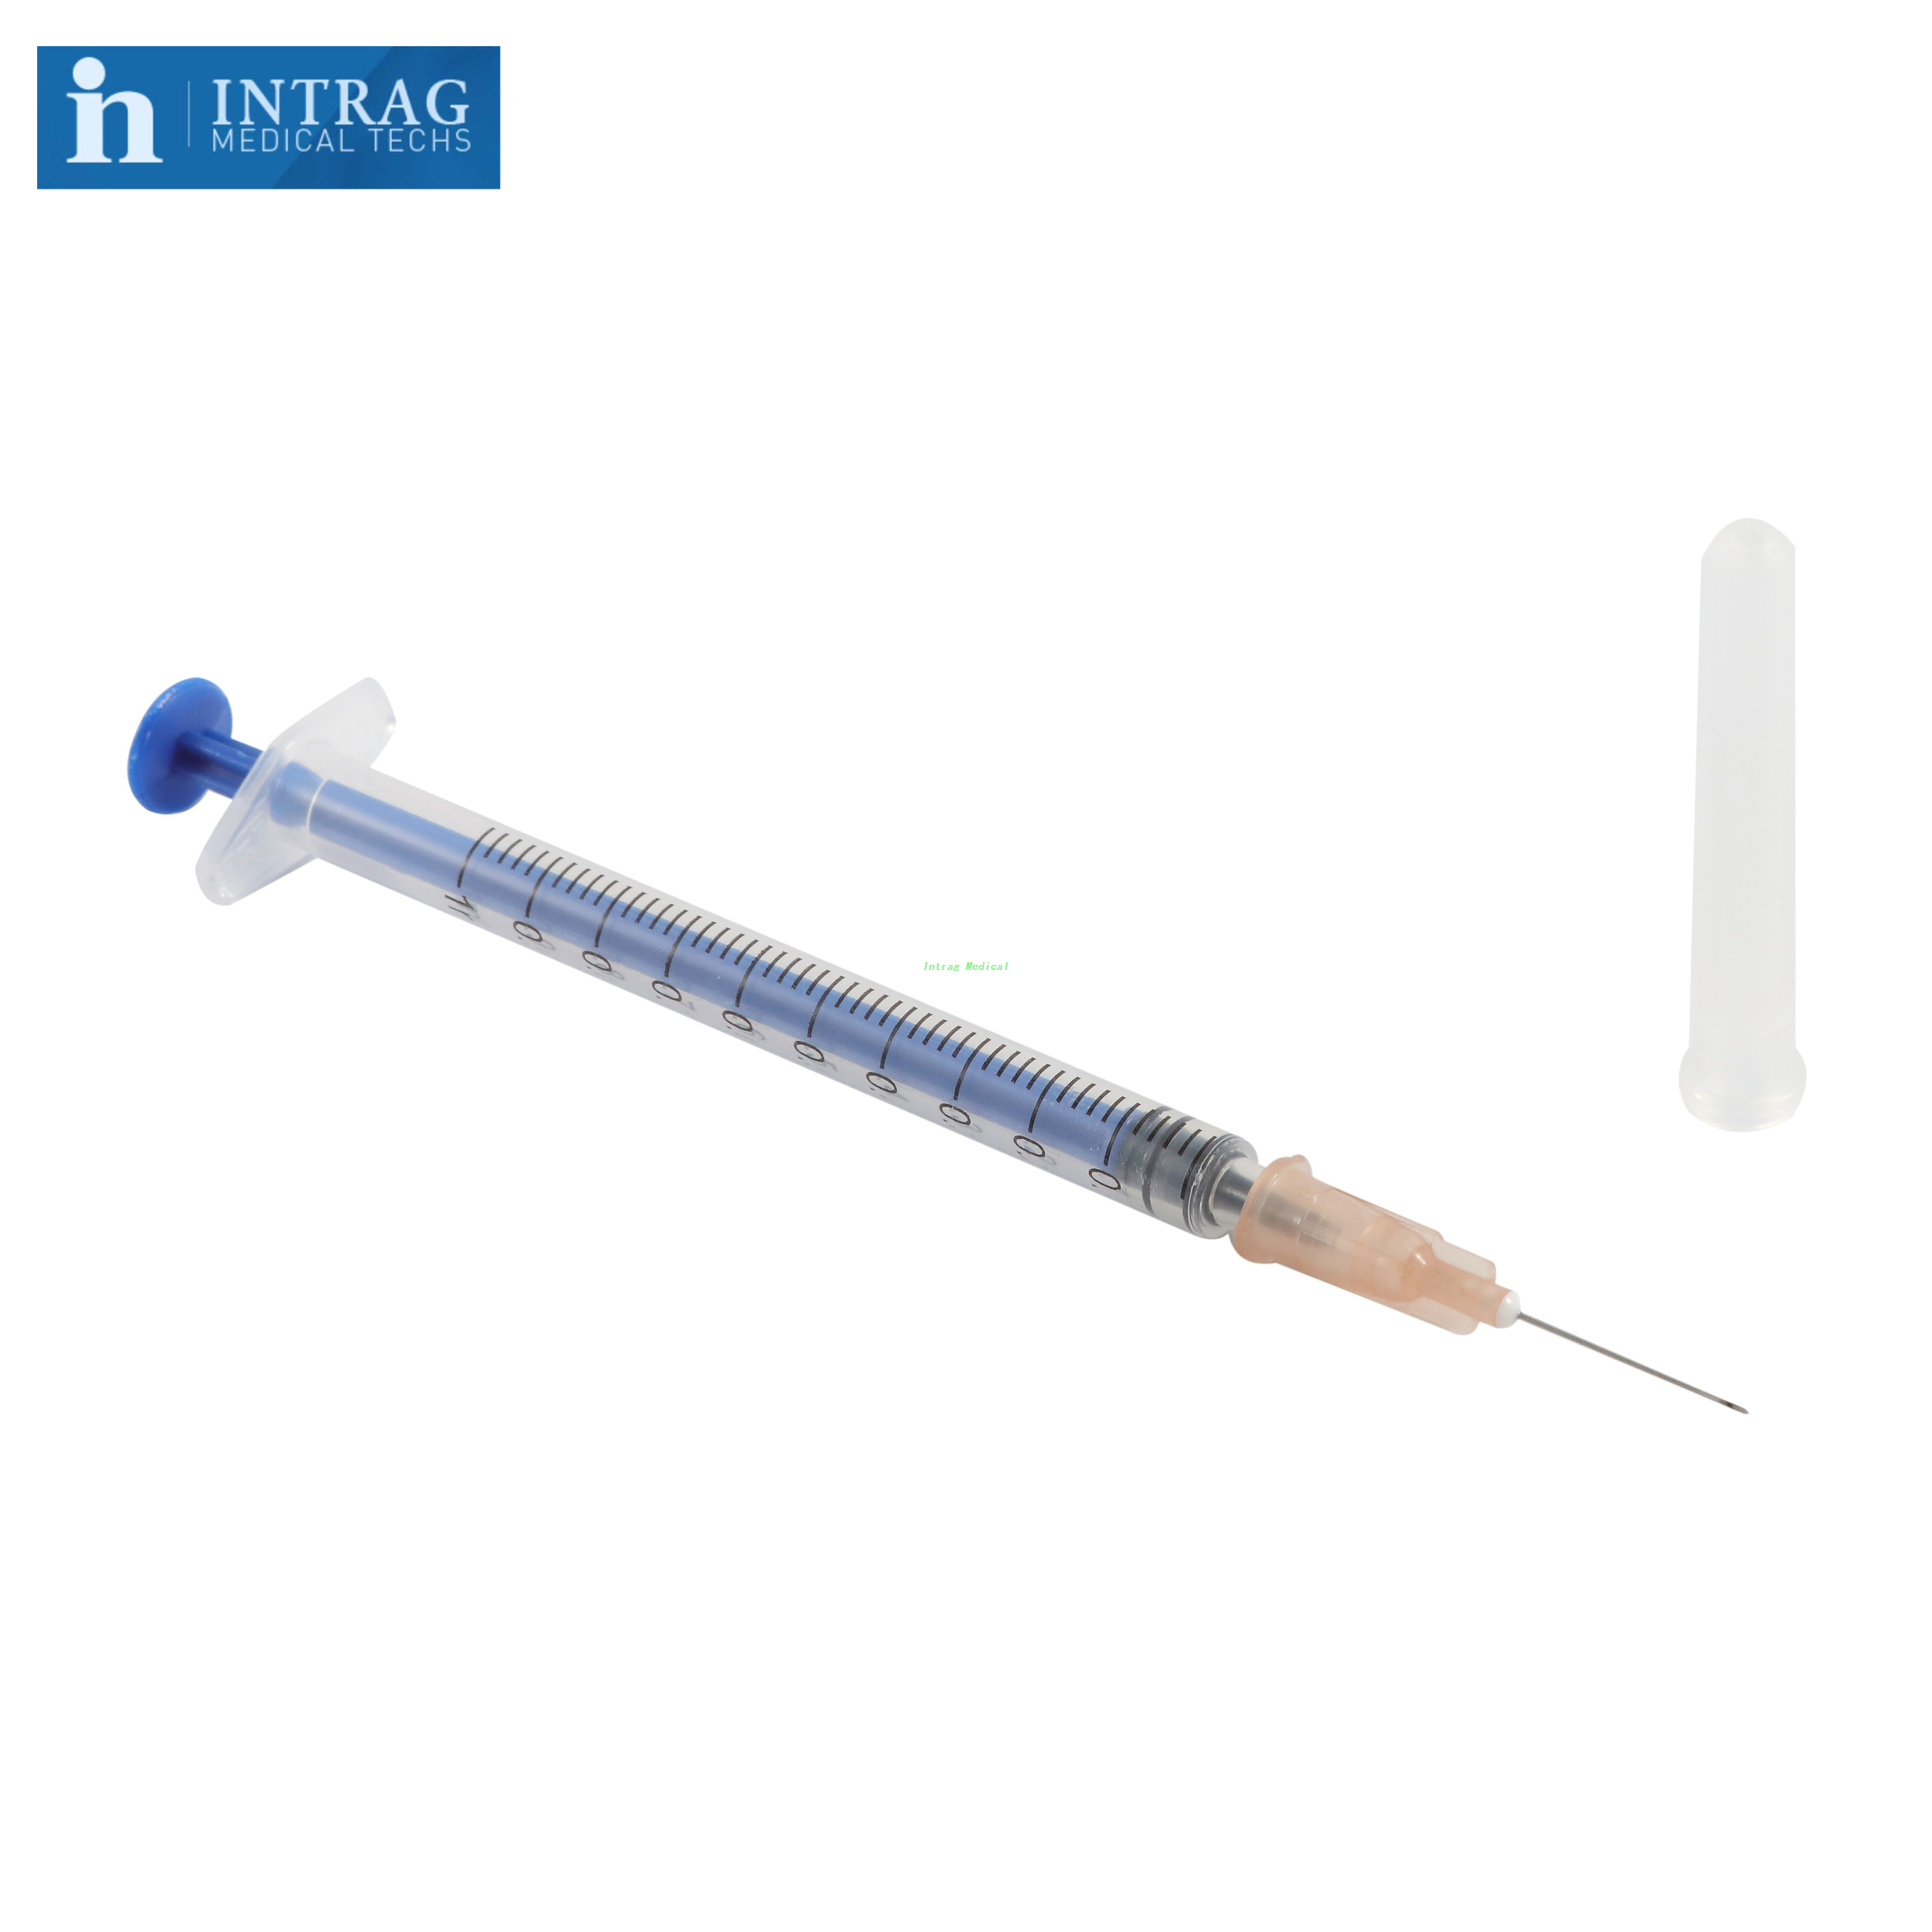 Tuberculin Syringe 1ml